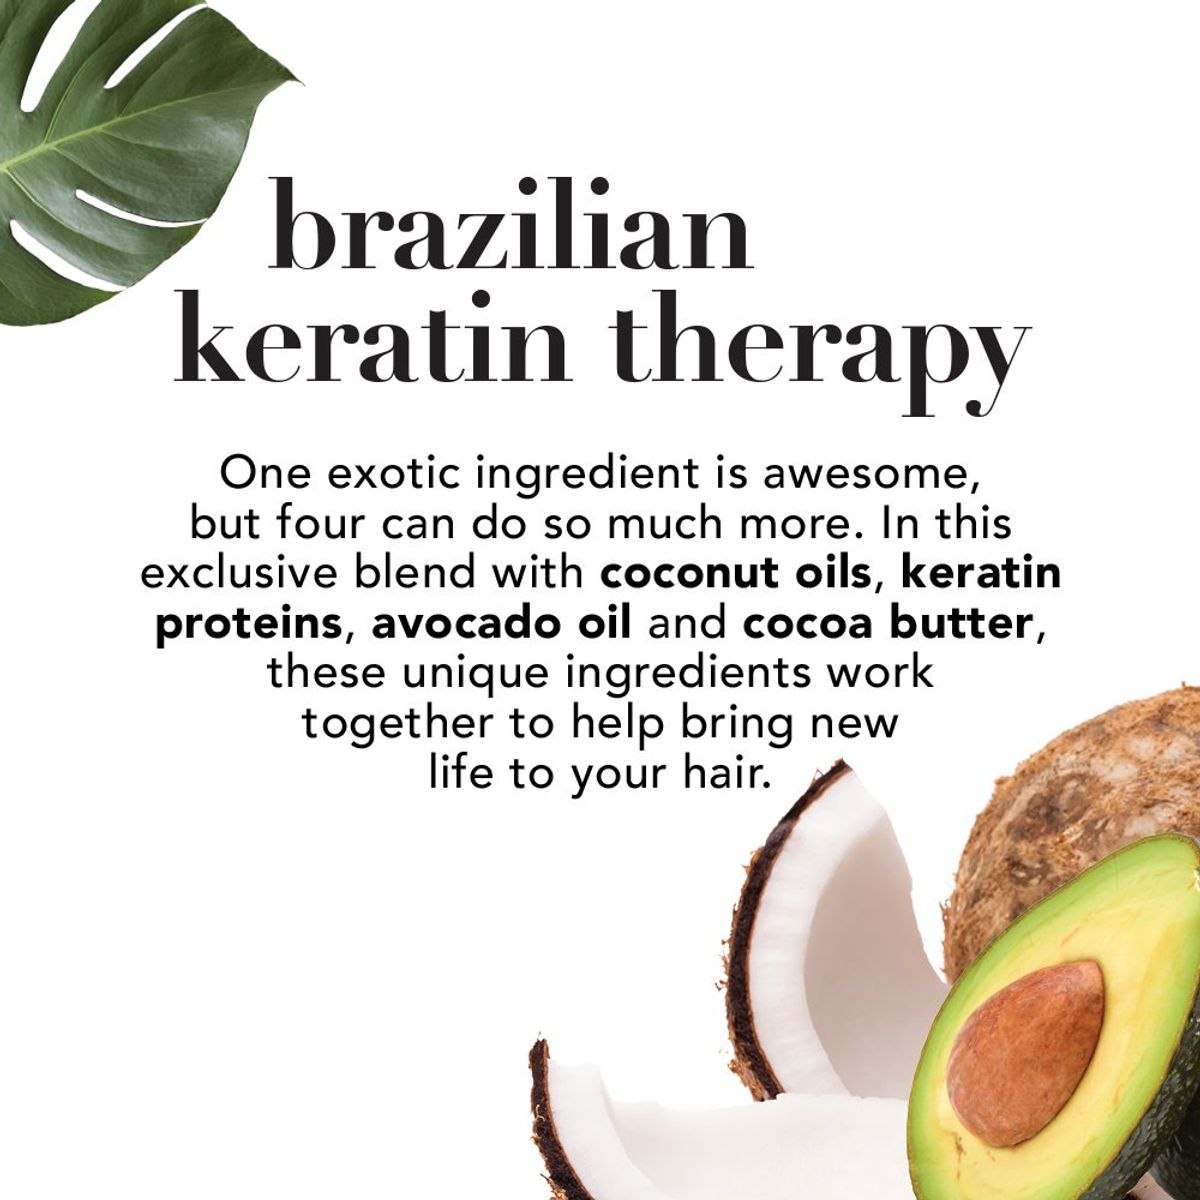 OGX Brazilian Keratin Therapy Shampoo + Conditioner  (385 ml + 385 ml) OGX